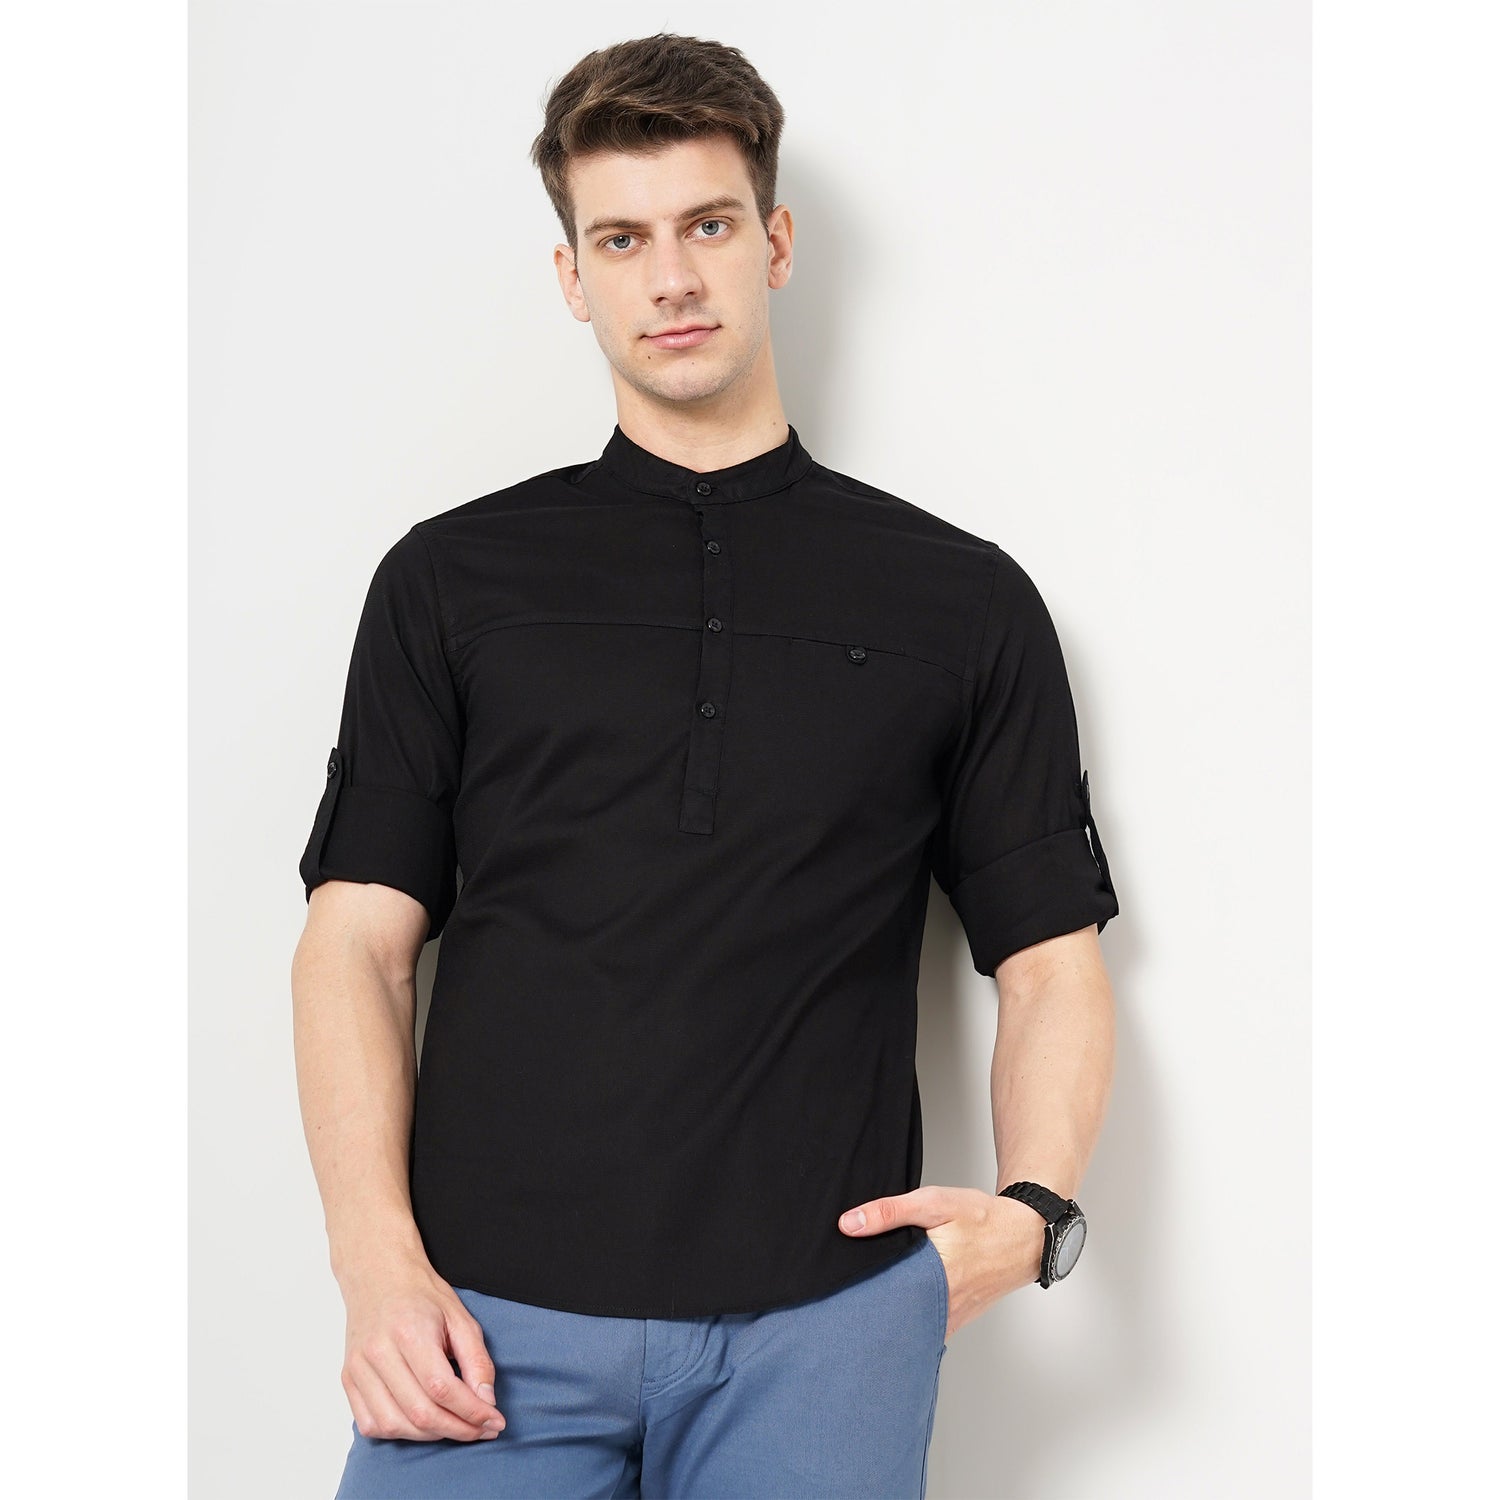 Black Solid Cotton Shirt